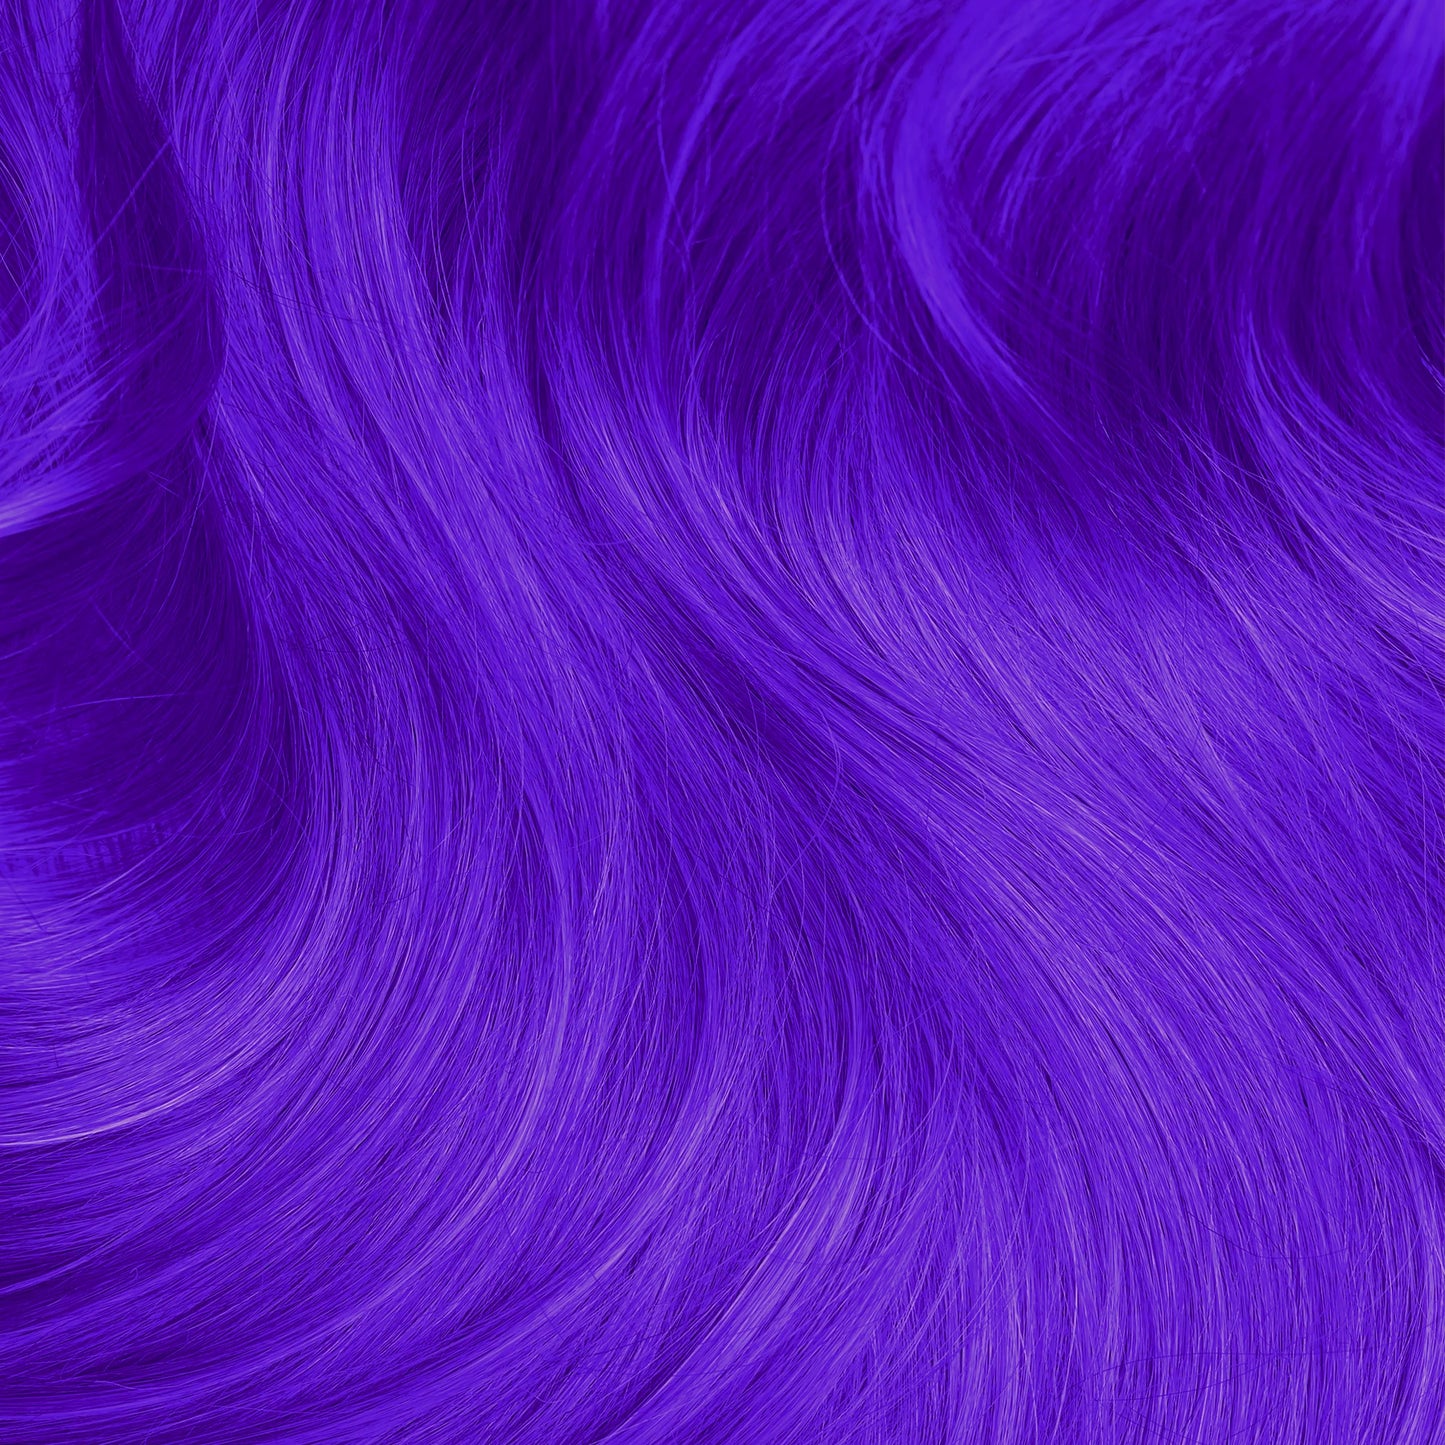 ORCHID PURPLE Hair Dye Lunar Tides